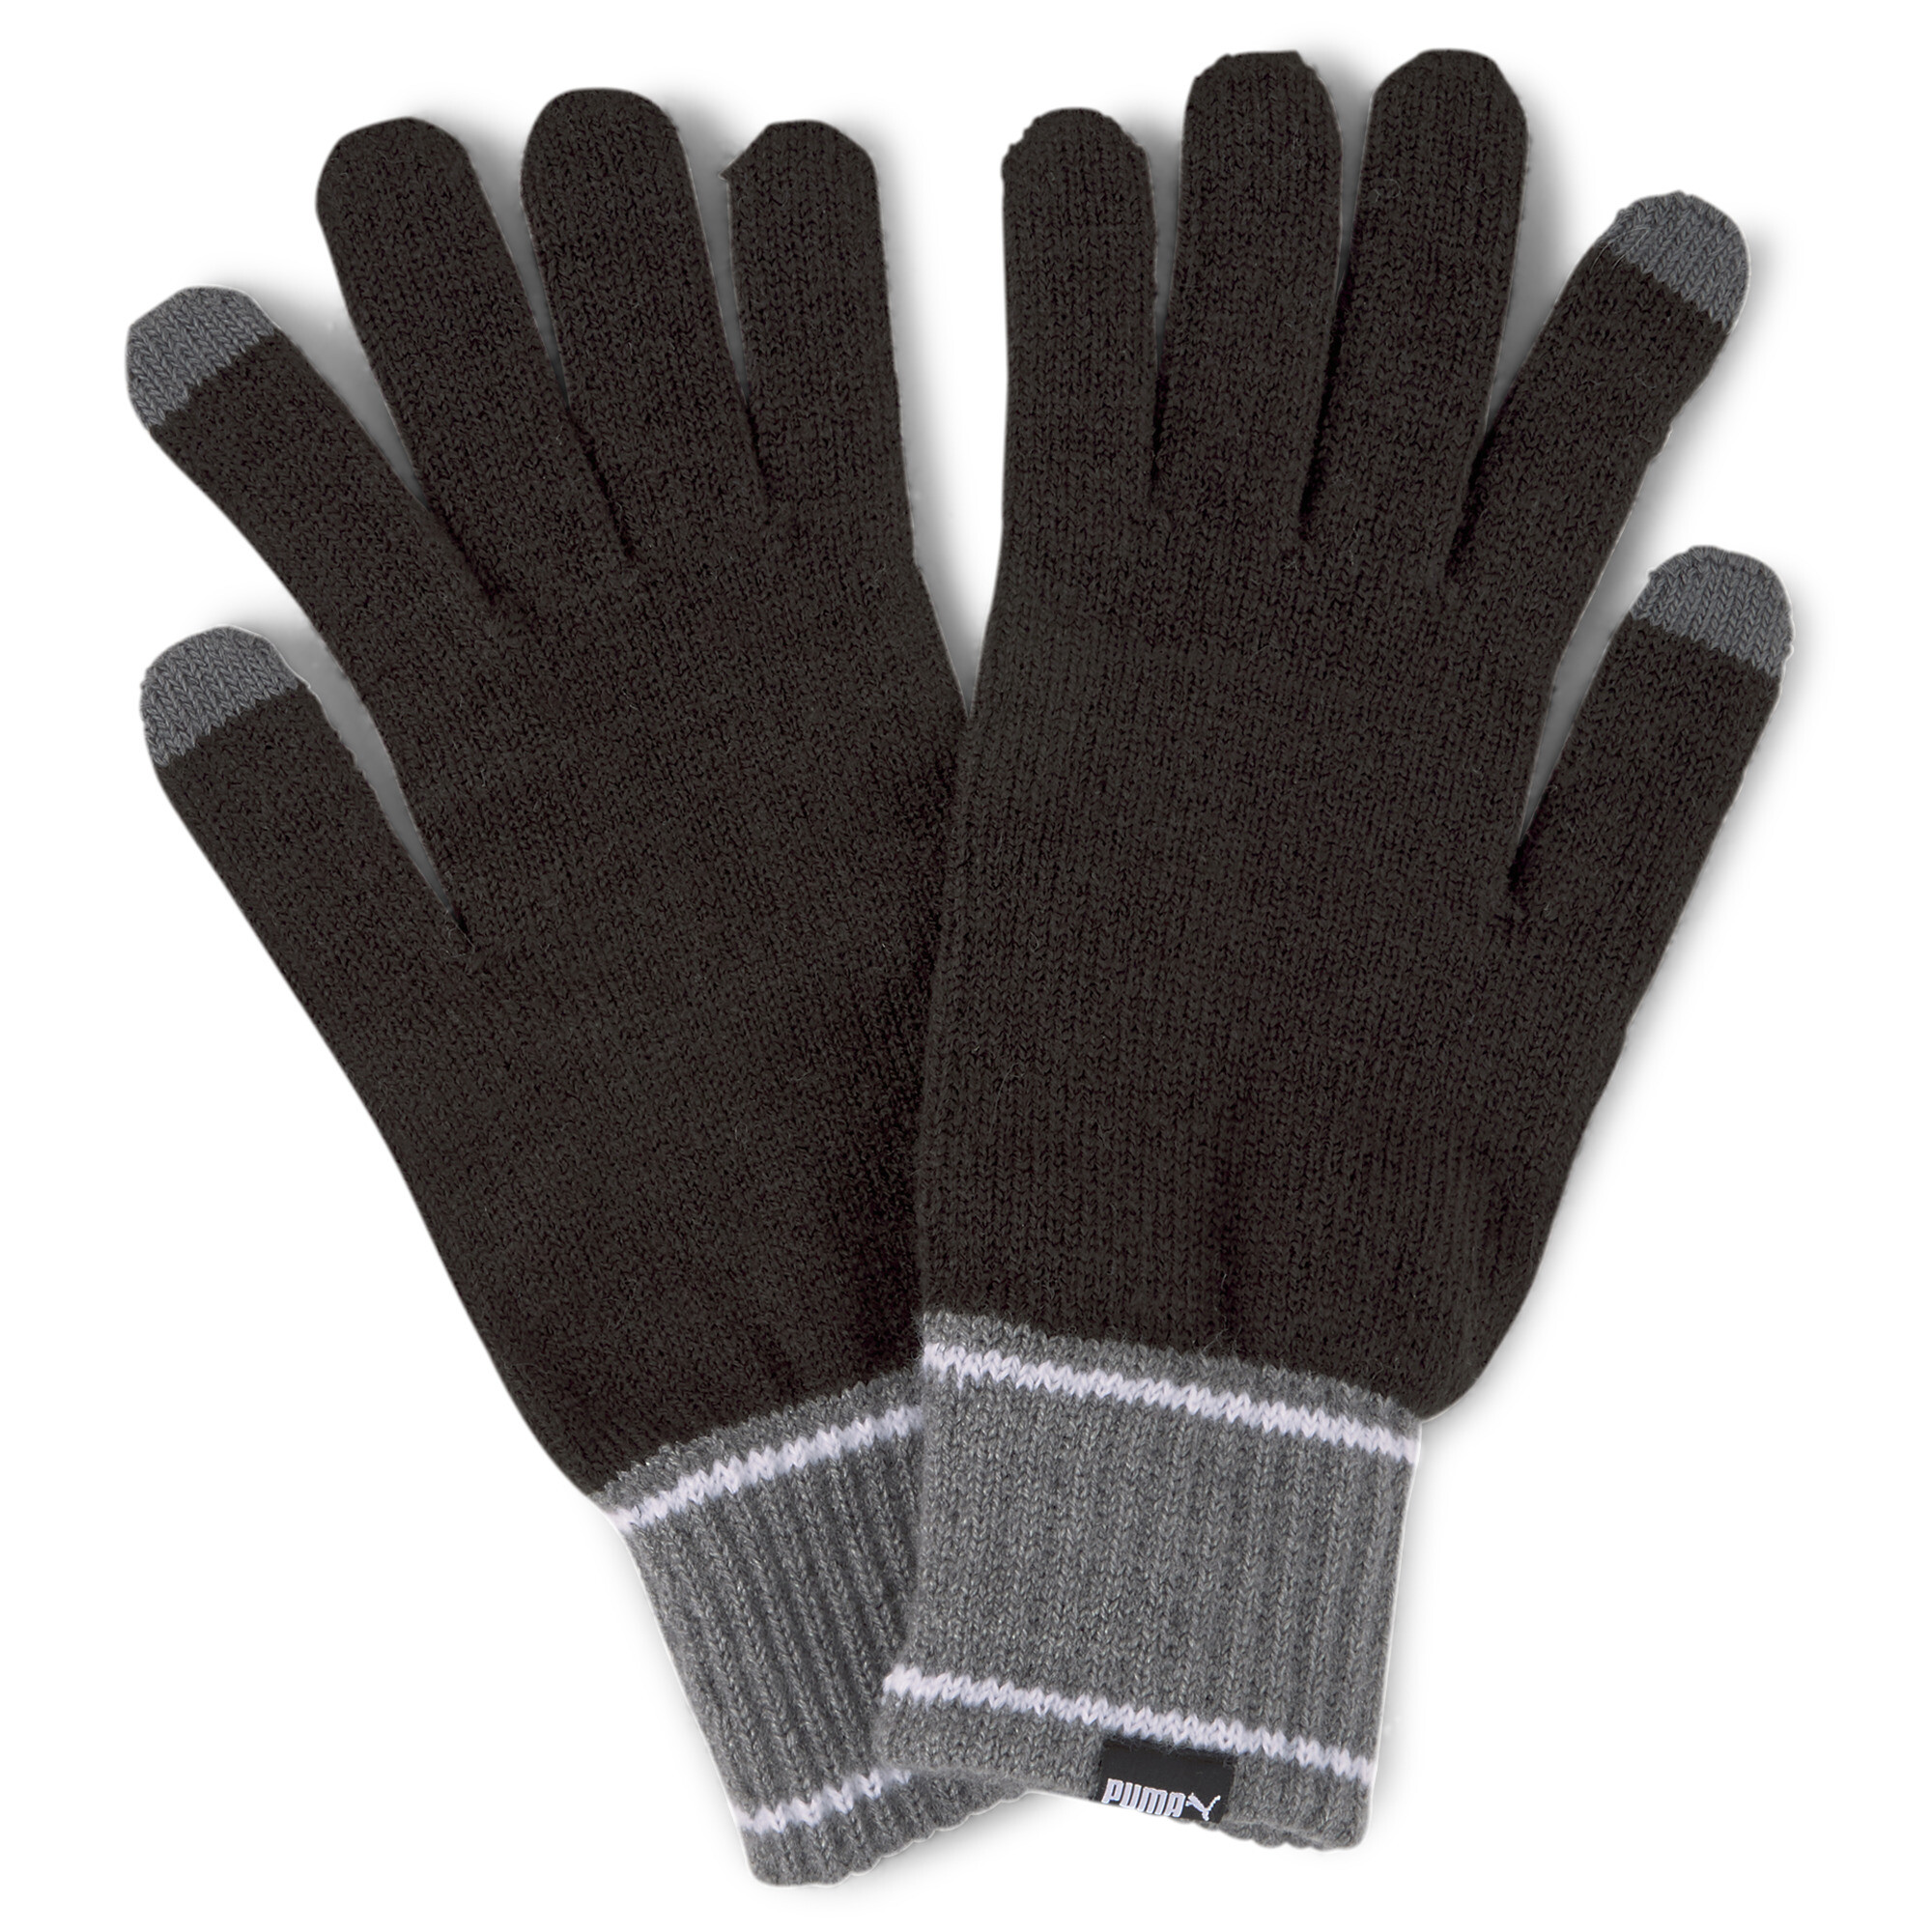 Puma Knitted Gloves, Black, Size M/L, Accessories